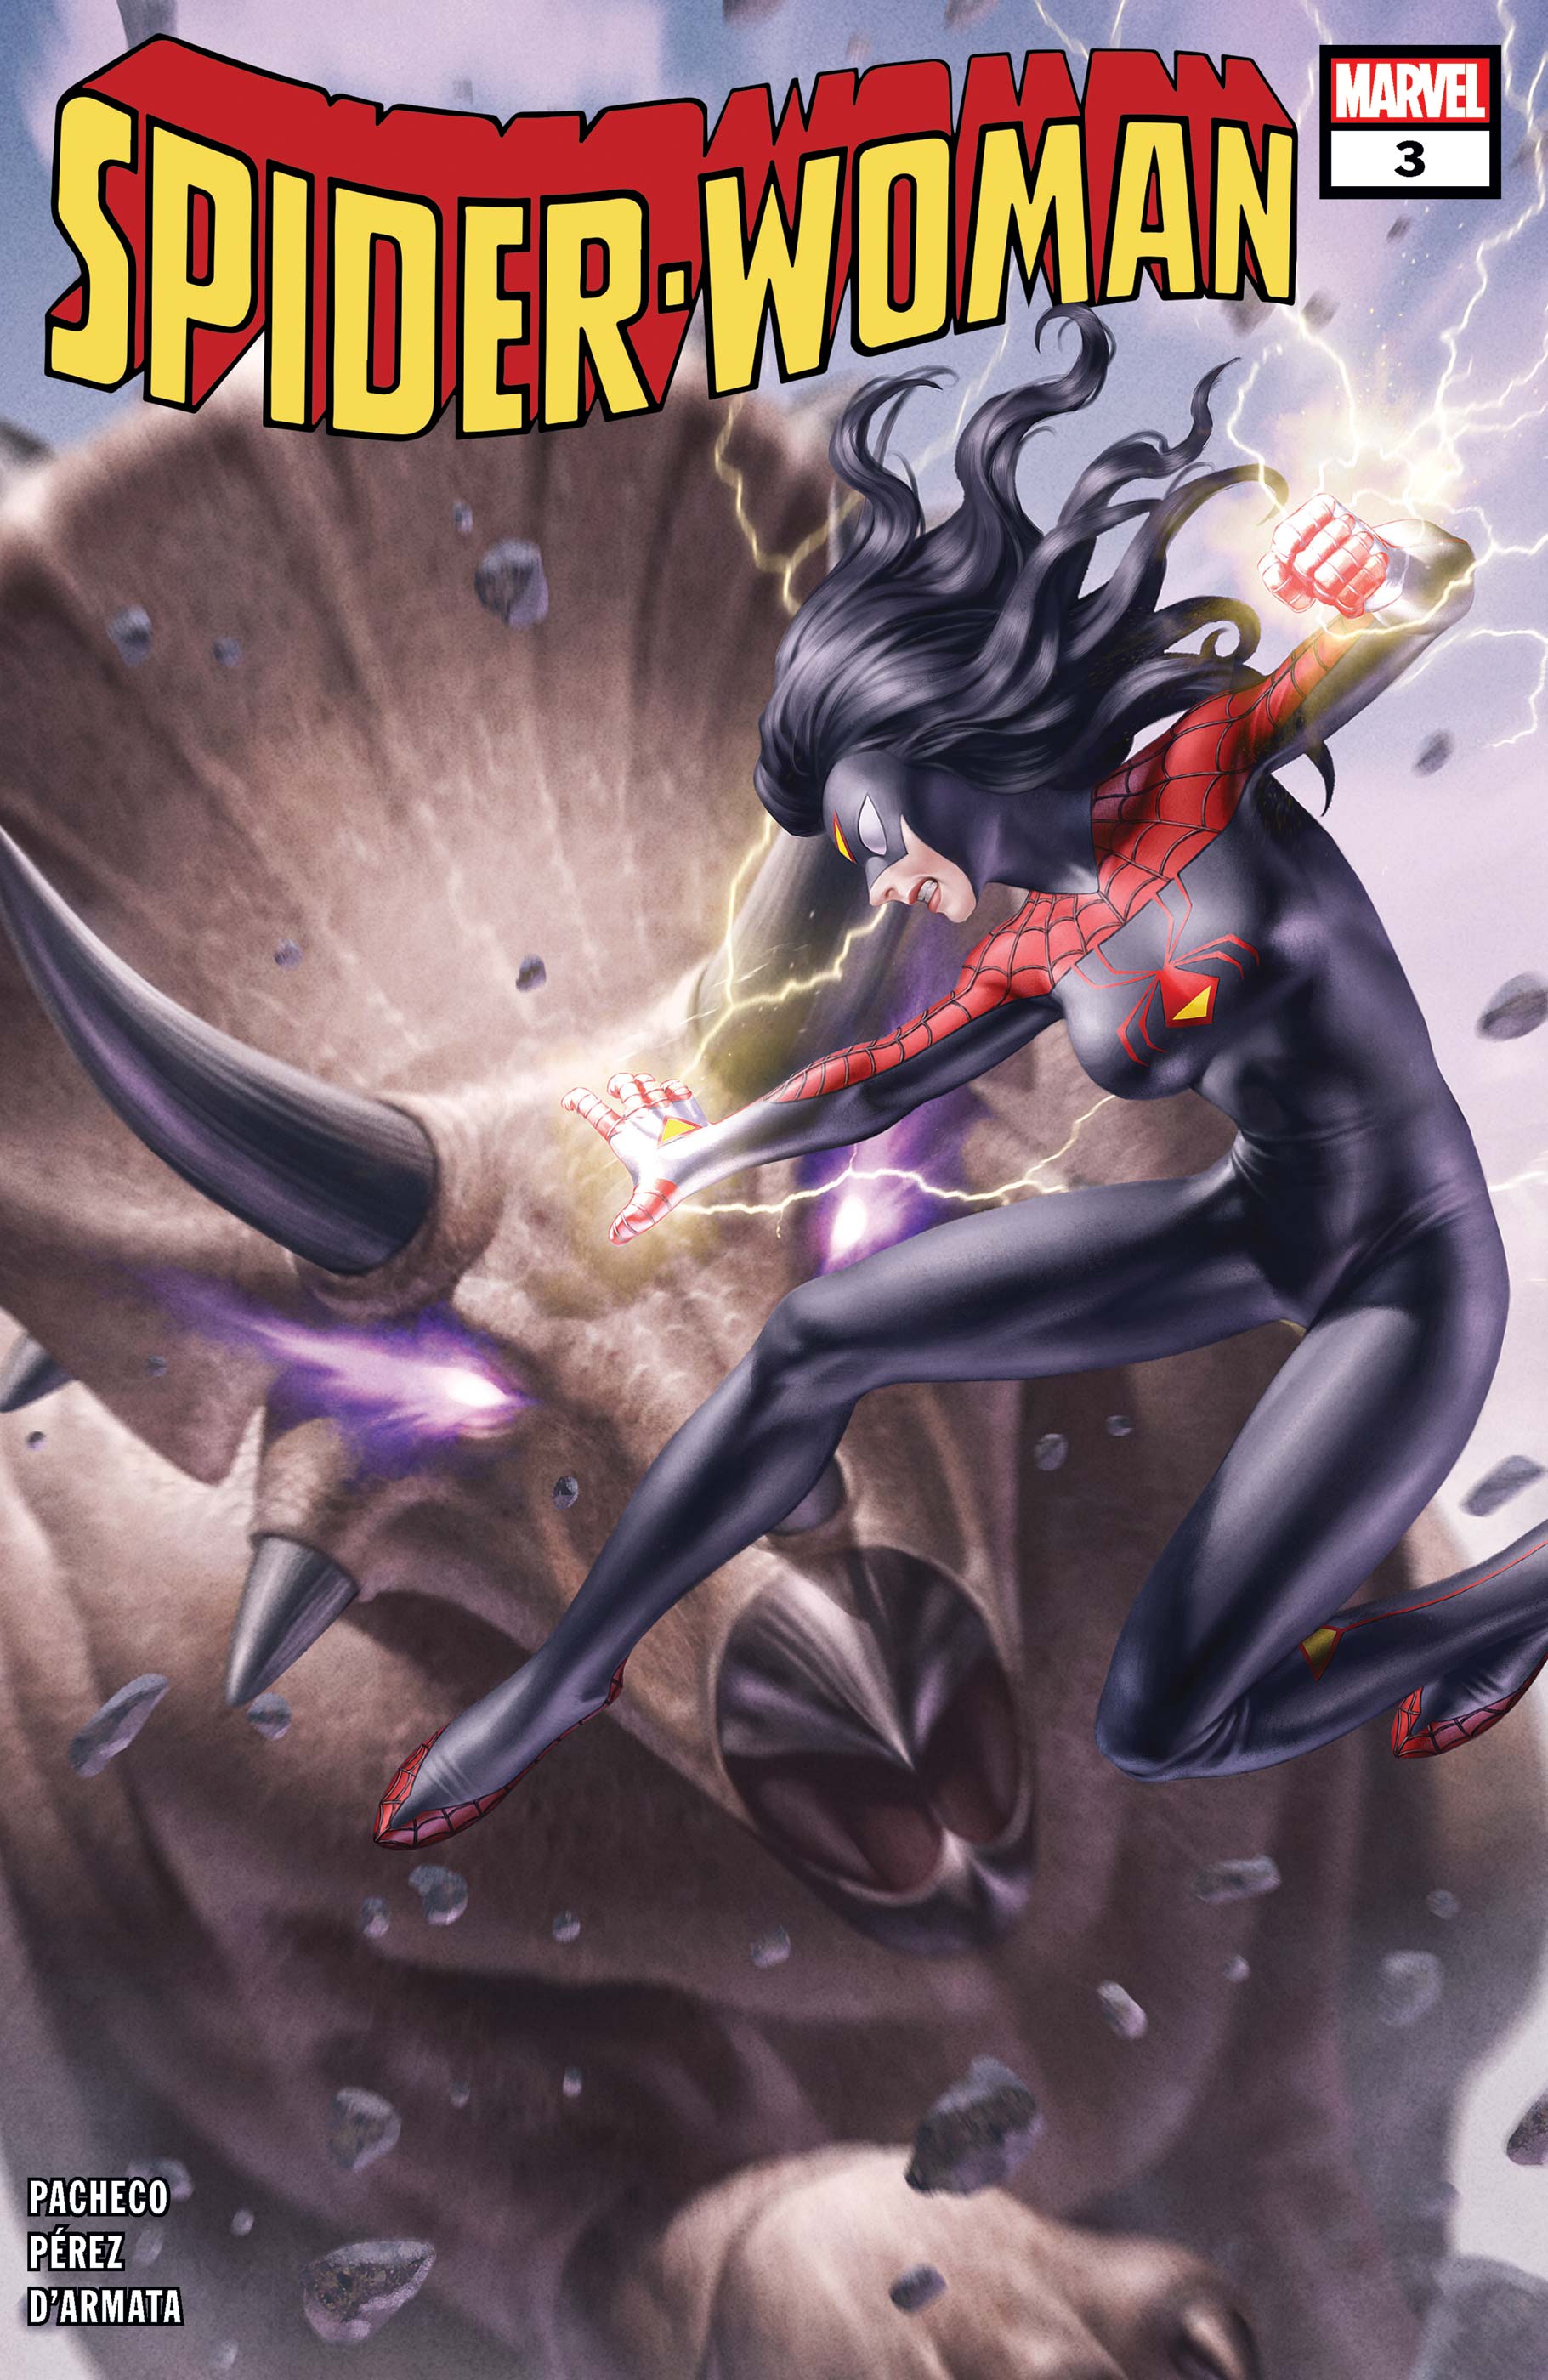 Spider-Woman (2020) #3